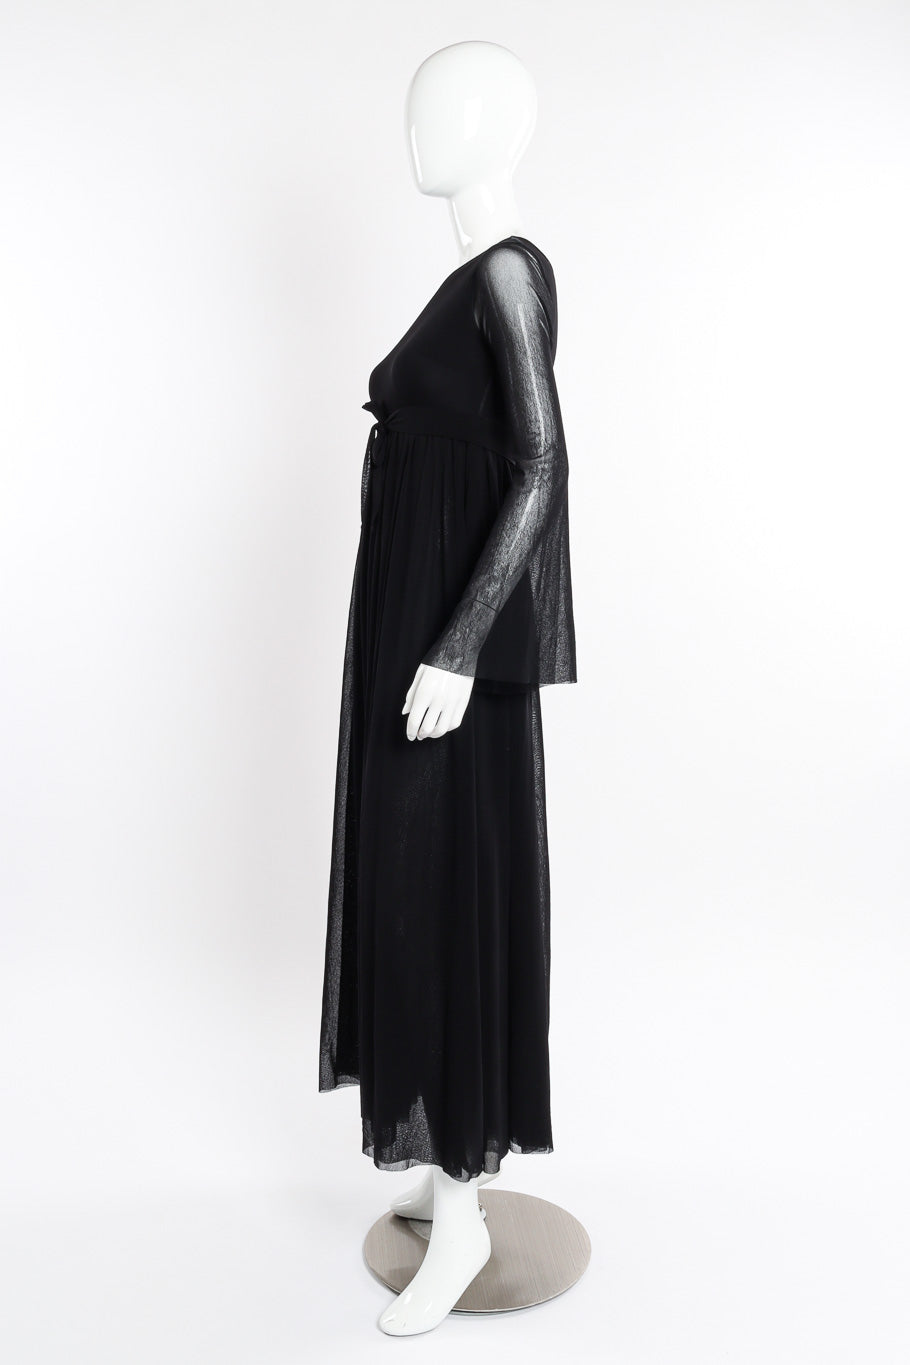 Jean Paul Gaultier Soleil One Shoulder Mesh Dress side view on mannequin @recessla